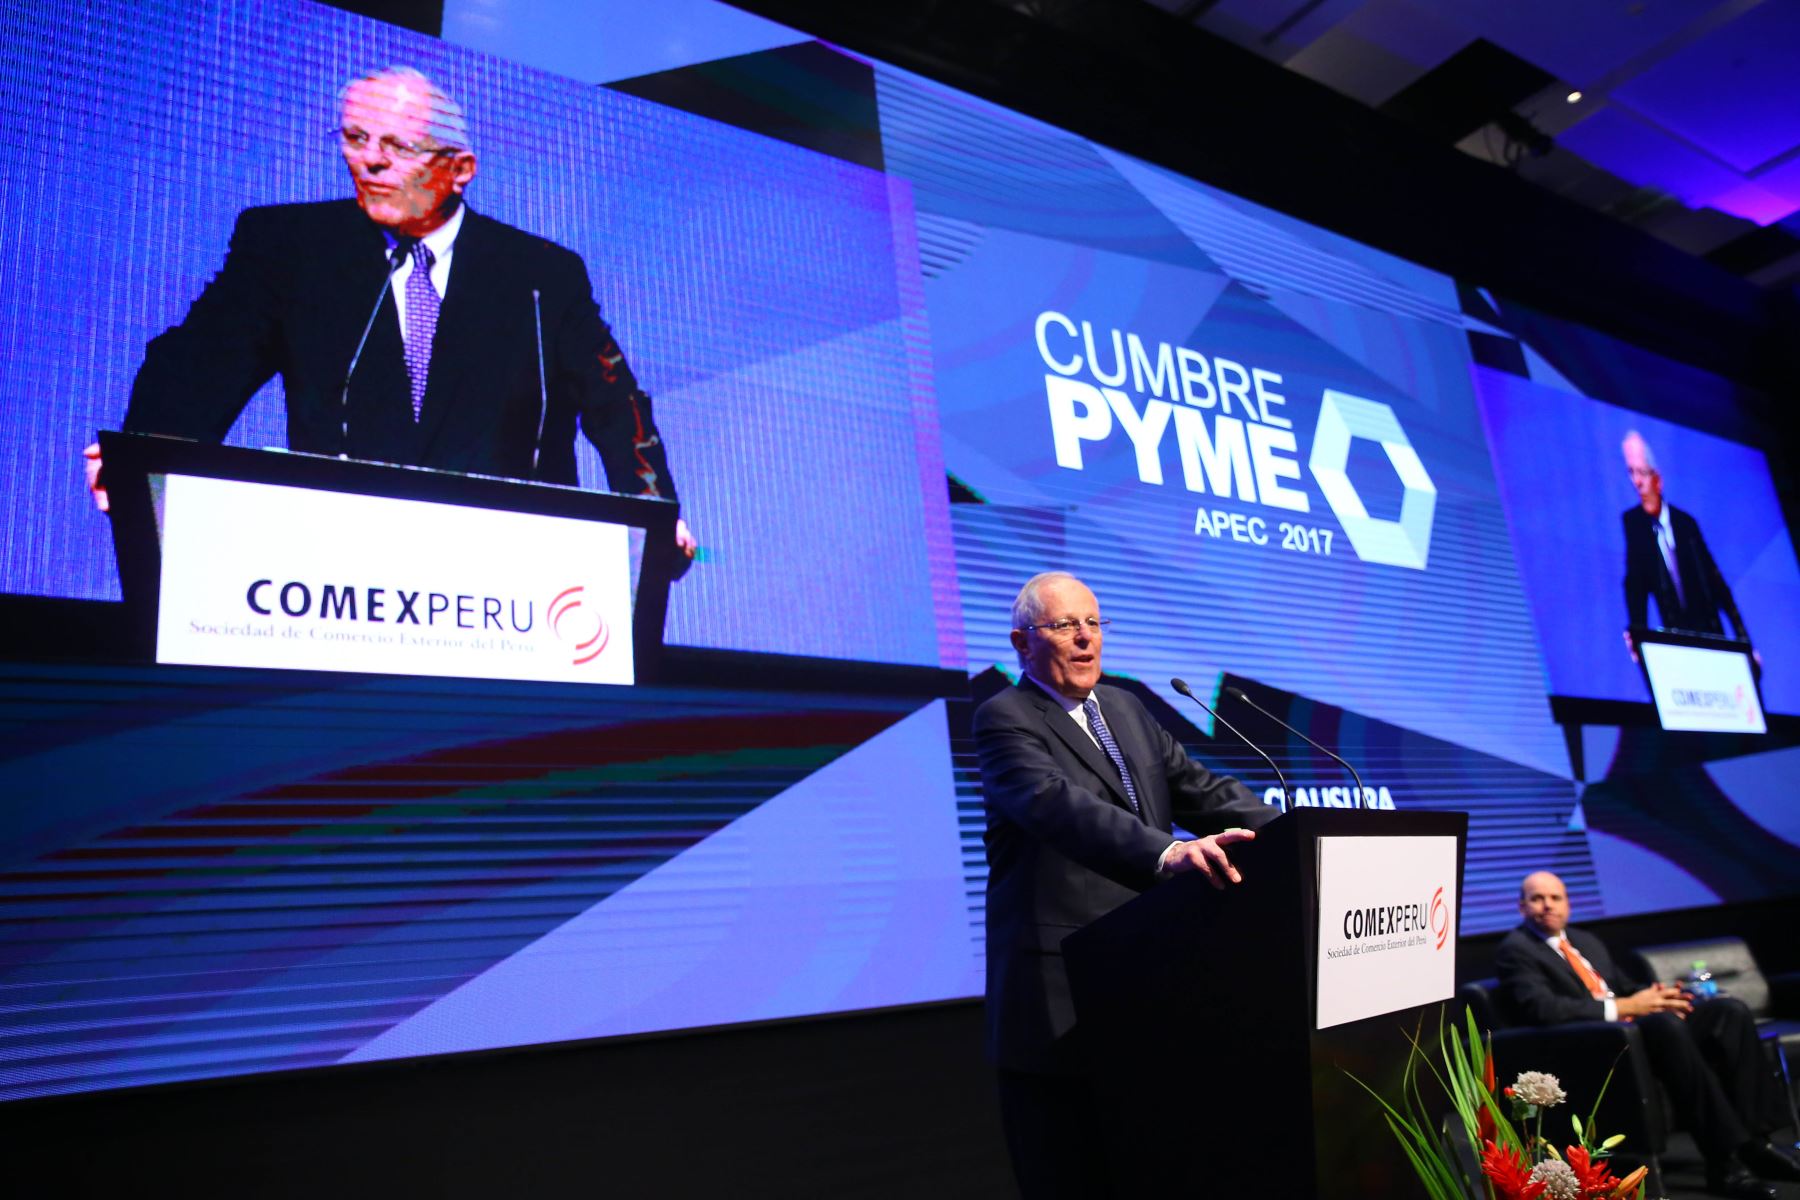 Presidente Pedro Pablo Kuczynski inauguró esta noche Cumbre Pyme APEC 2017.